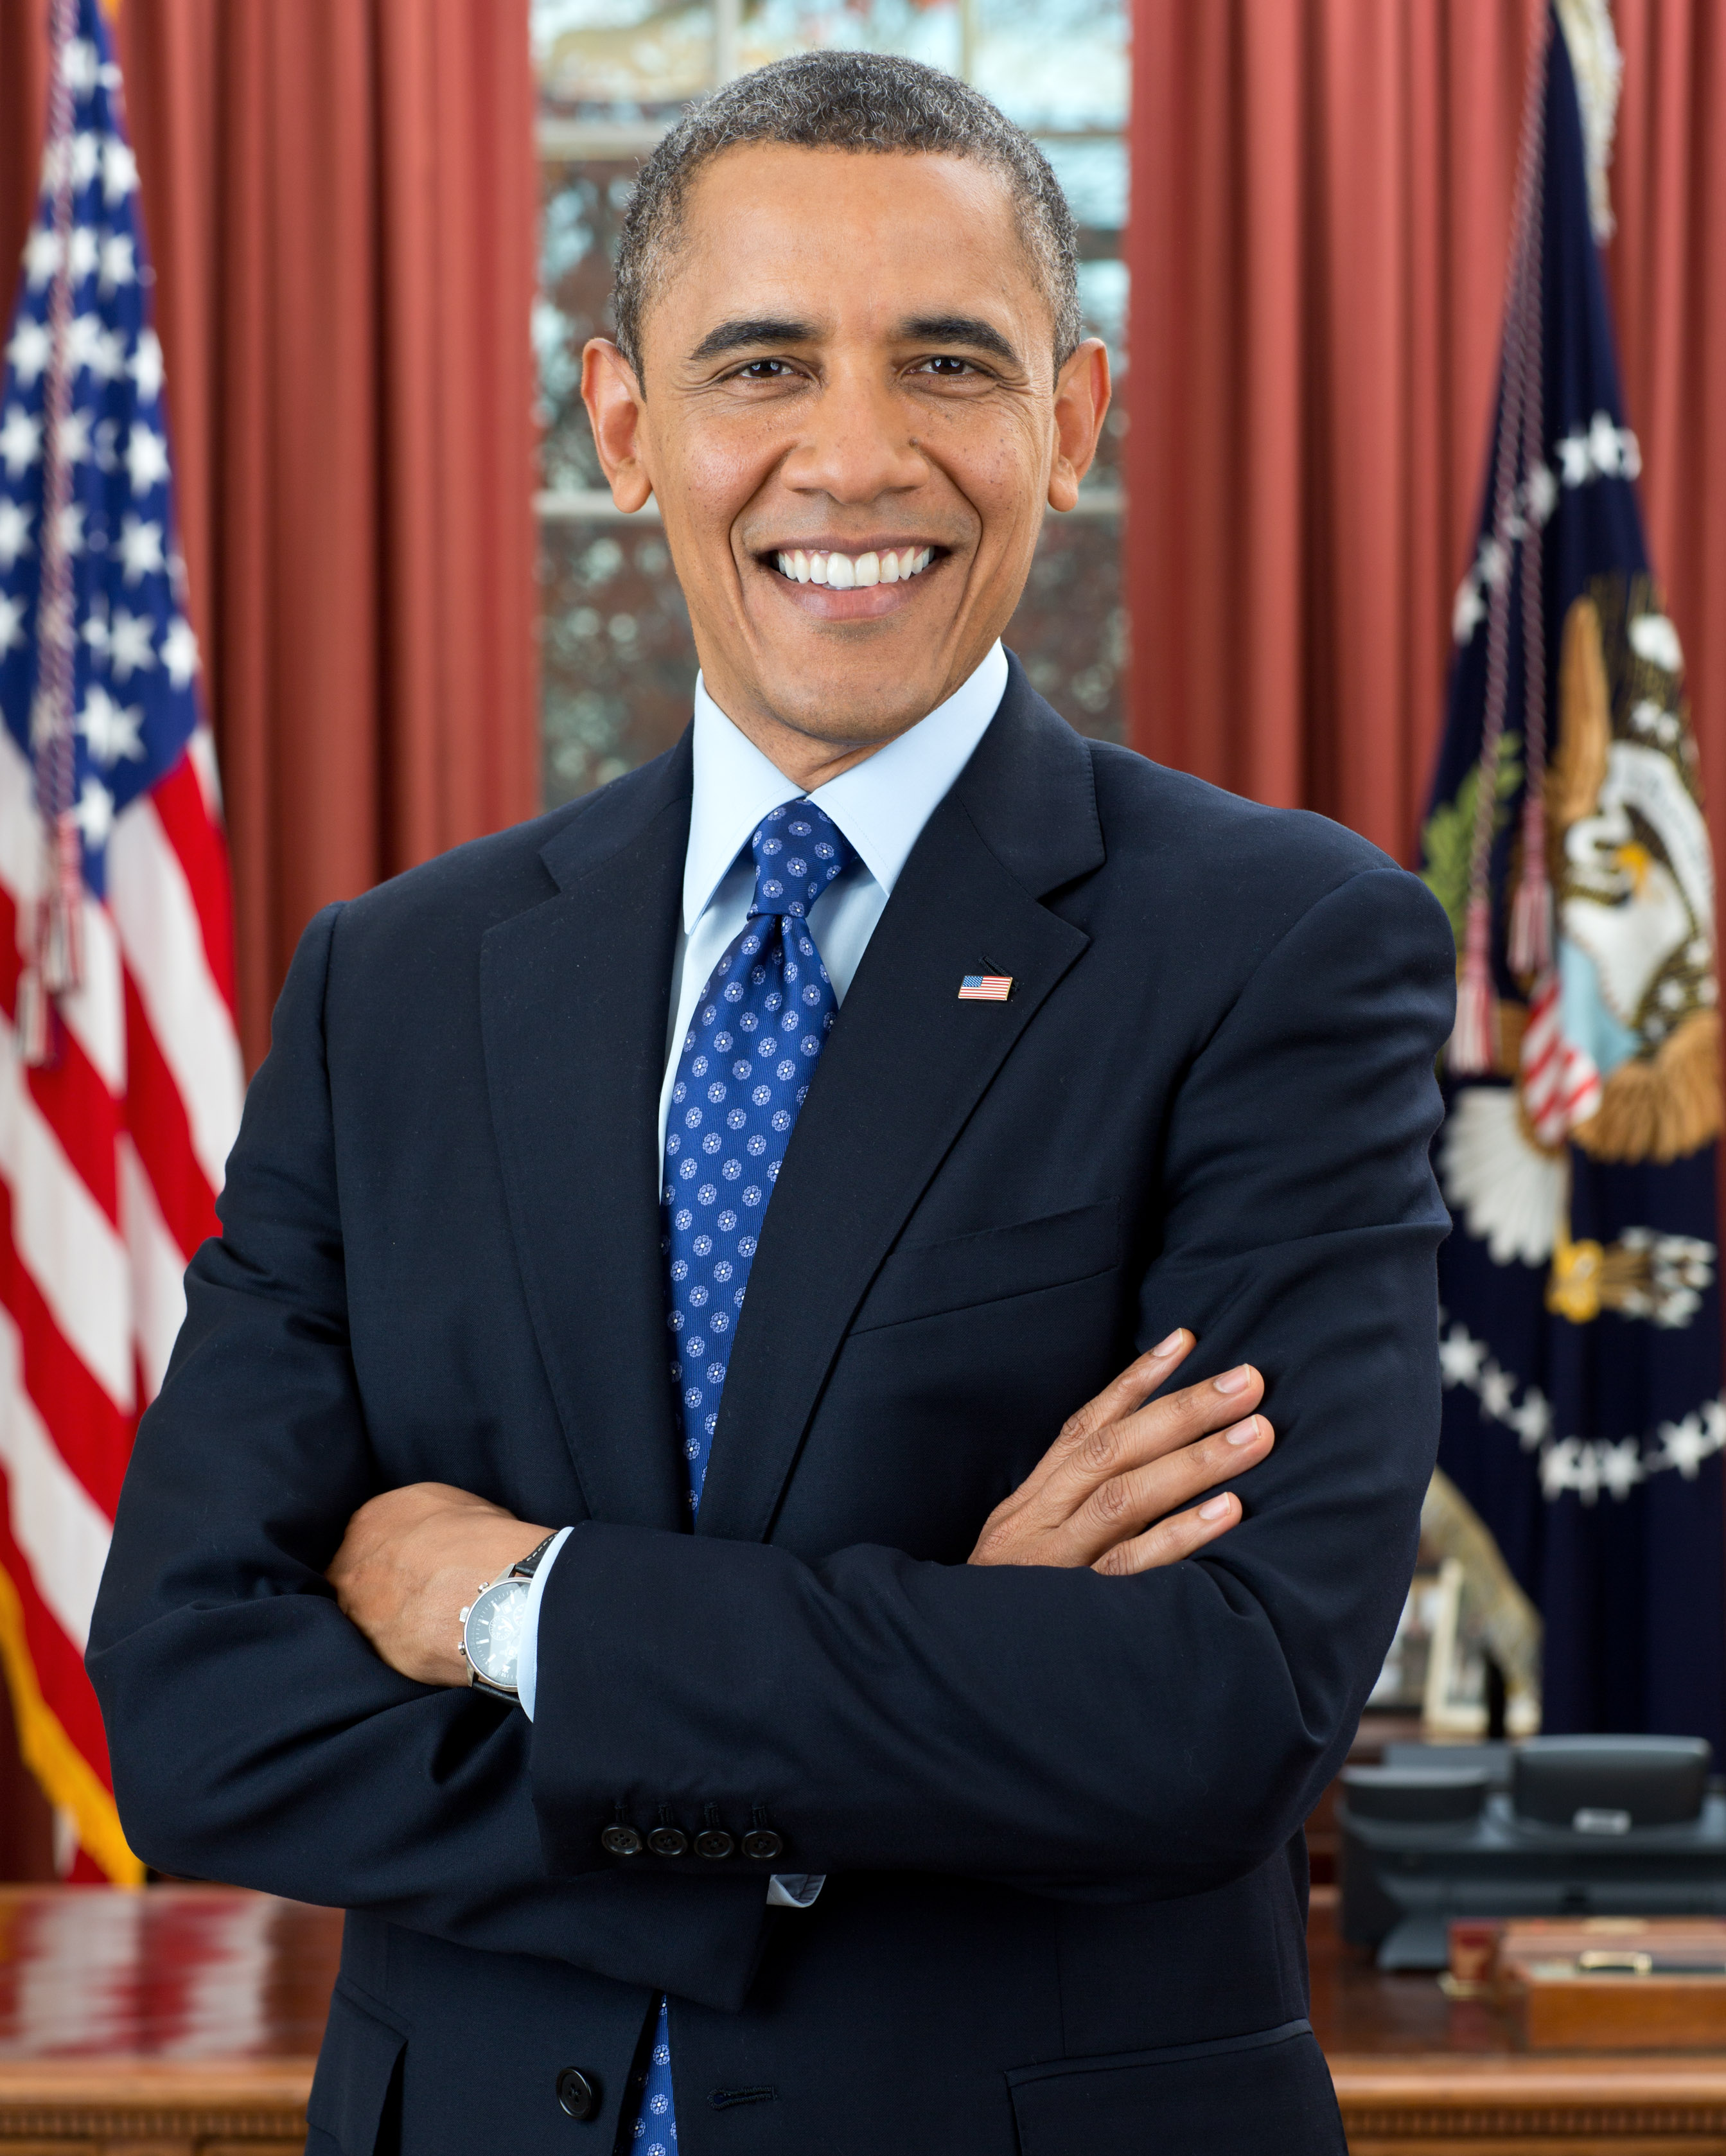 http://en.wikipedia.org/wiki/Barack_Obama#/media/File:President_Barack_Obama.jpg